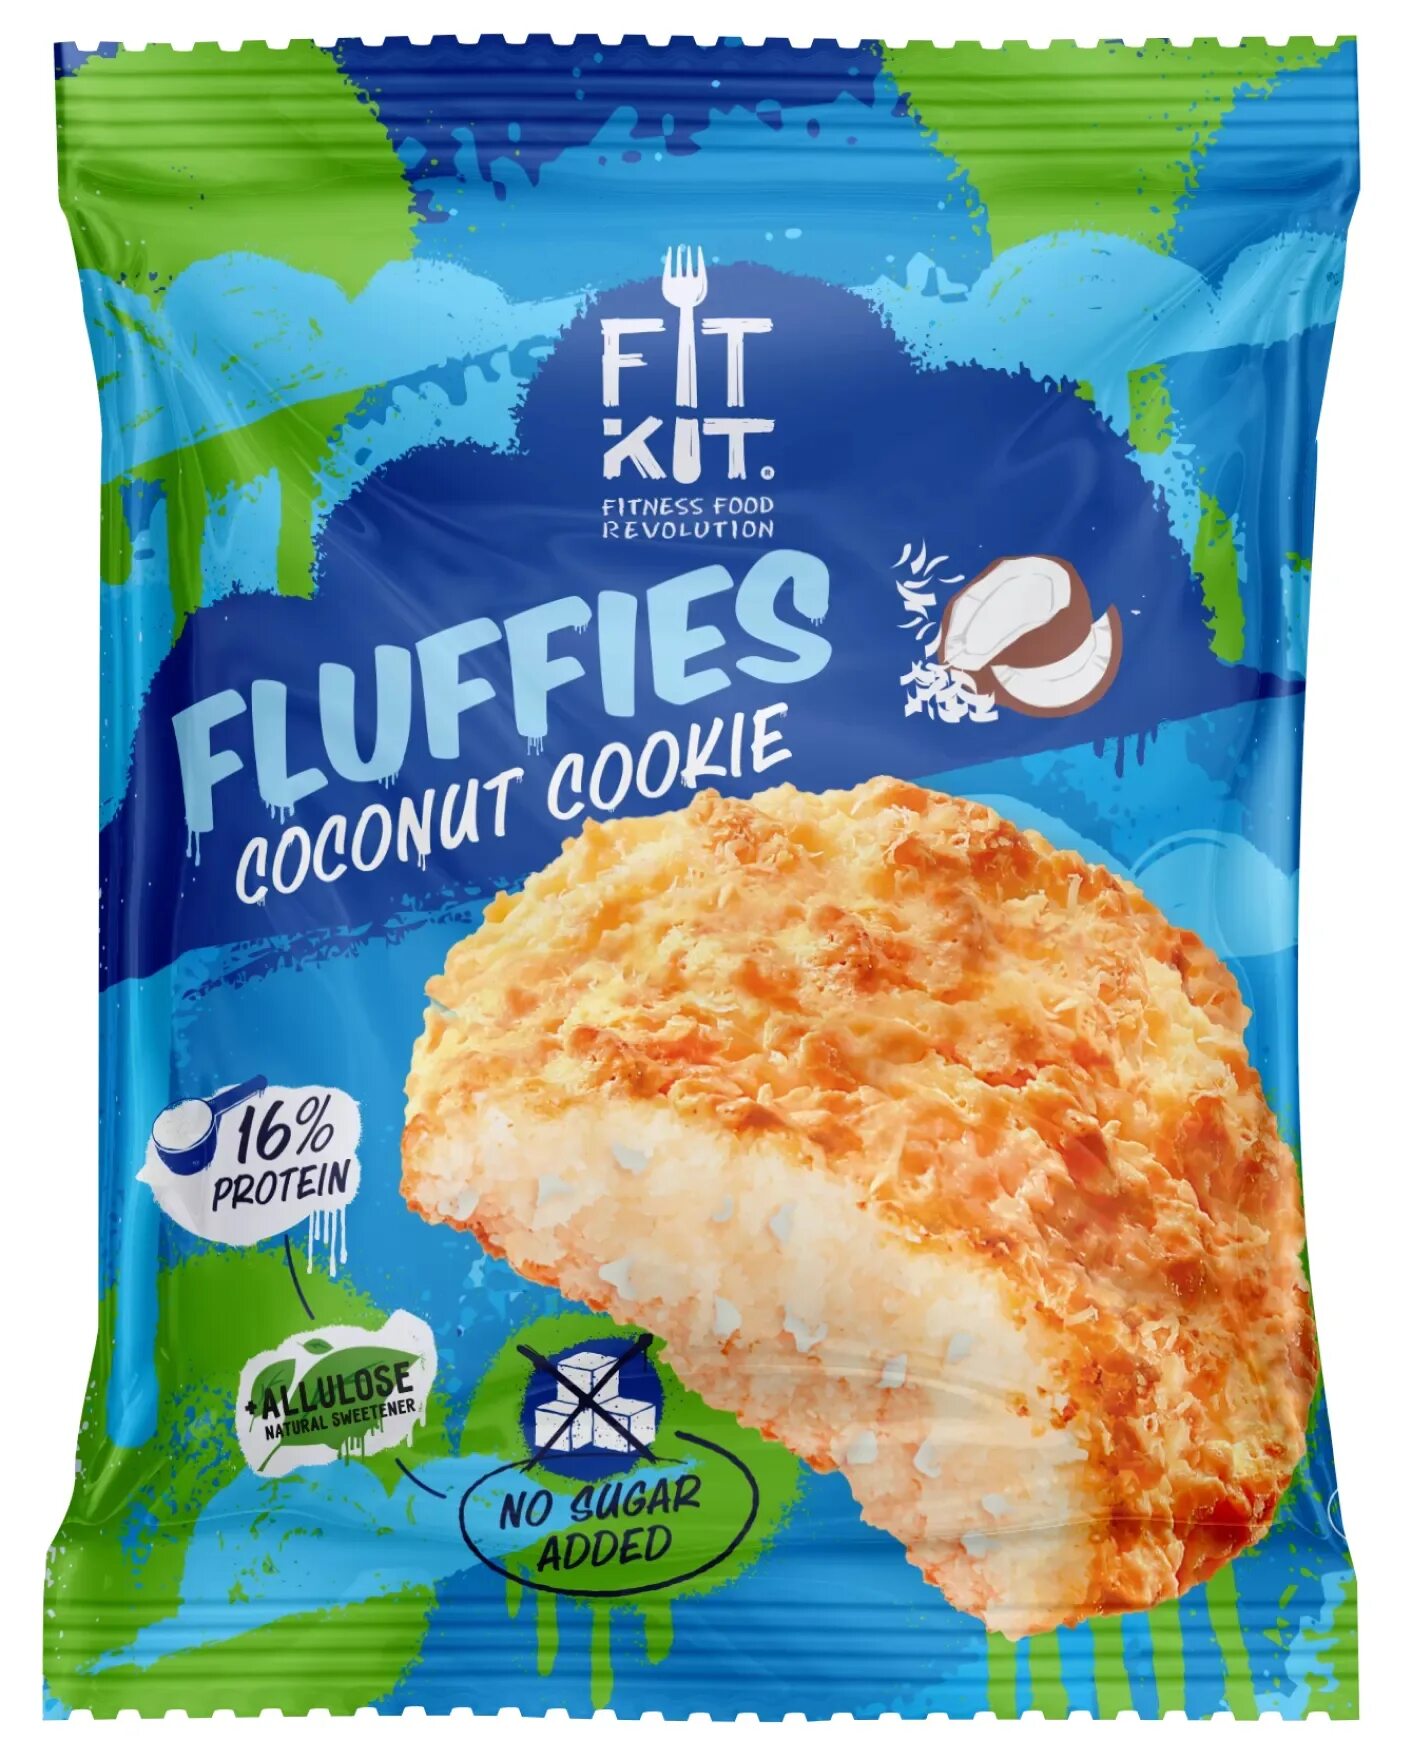 Fitkit. Протеиновое печенье Fit Kit. Fit Kit fluffies, 30 гр.. Fit Kit Fitstick Crispy 45g. Протеиновое печенье с кокосом.